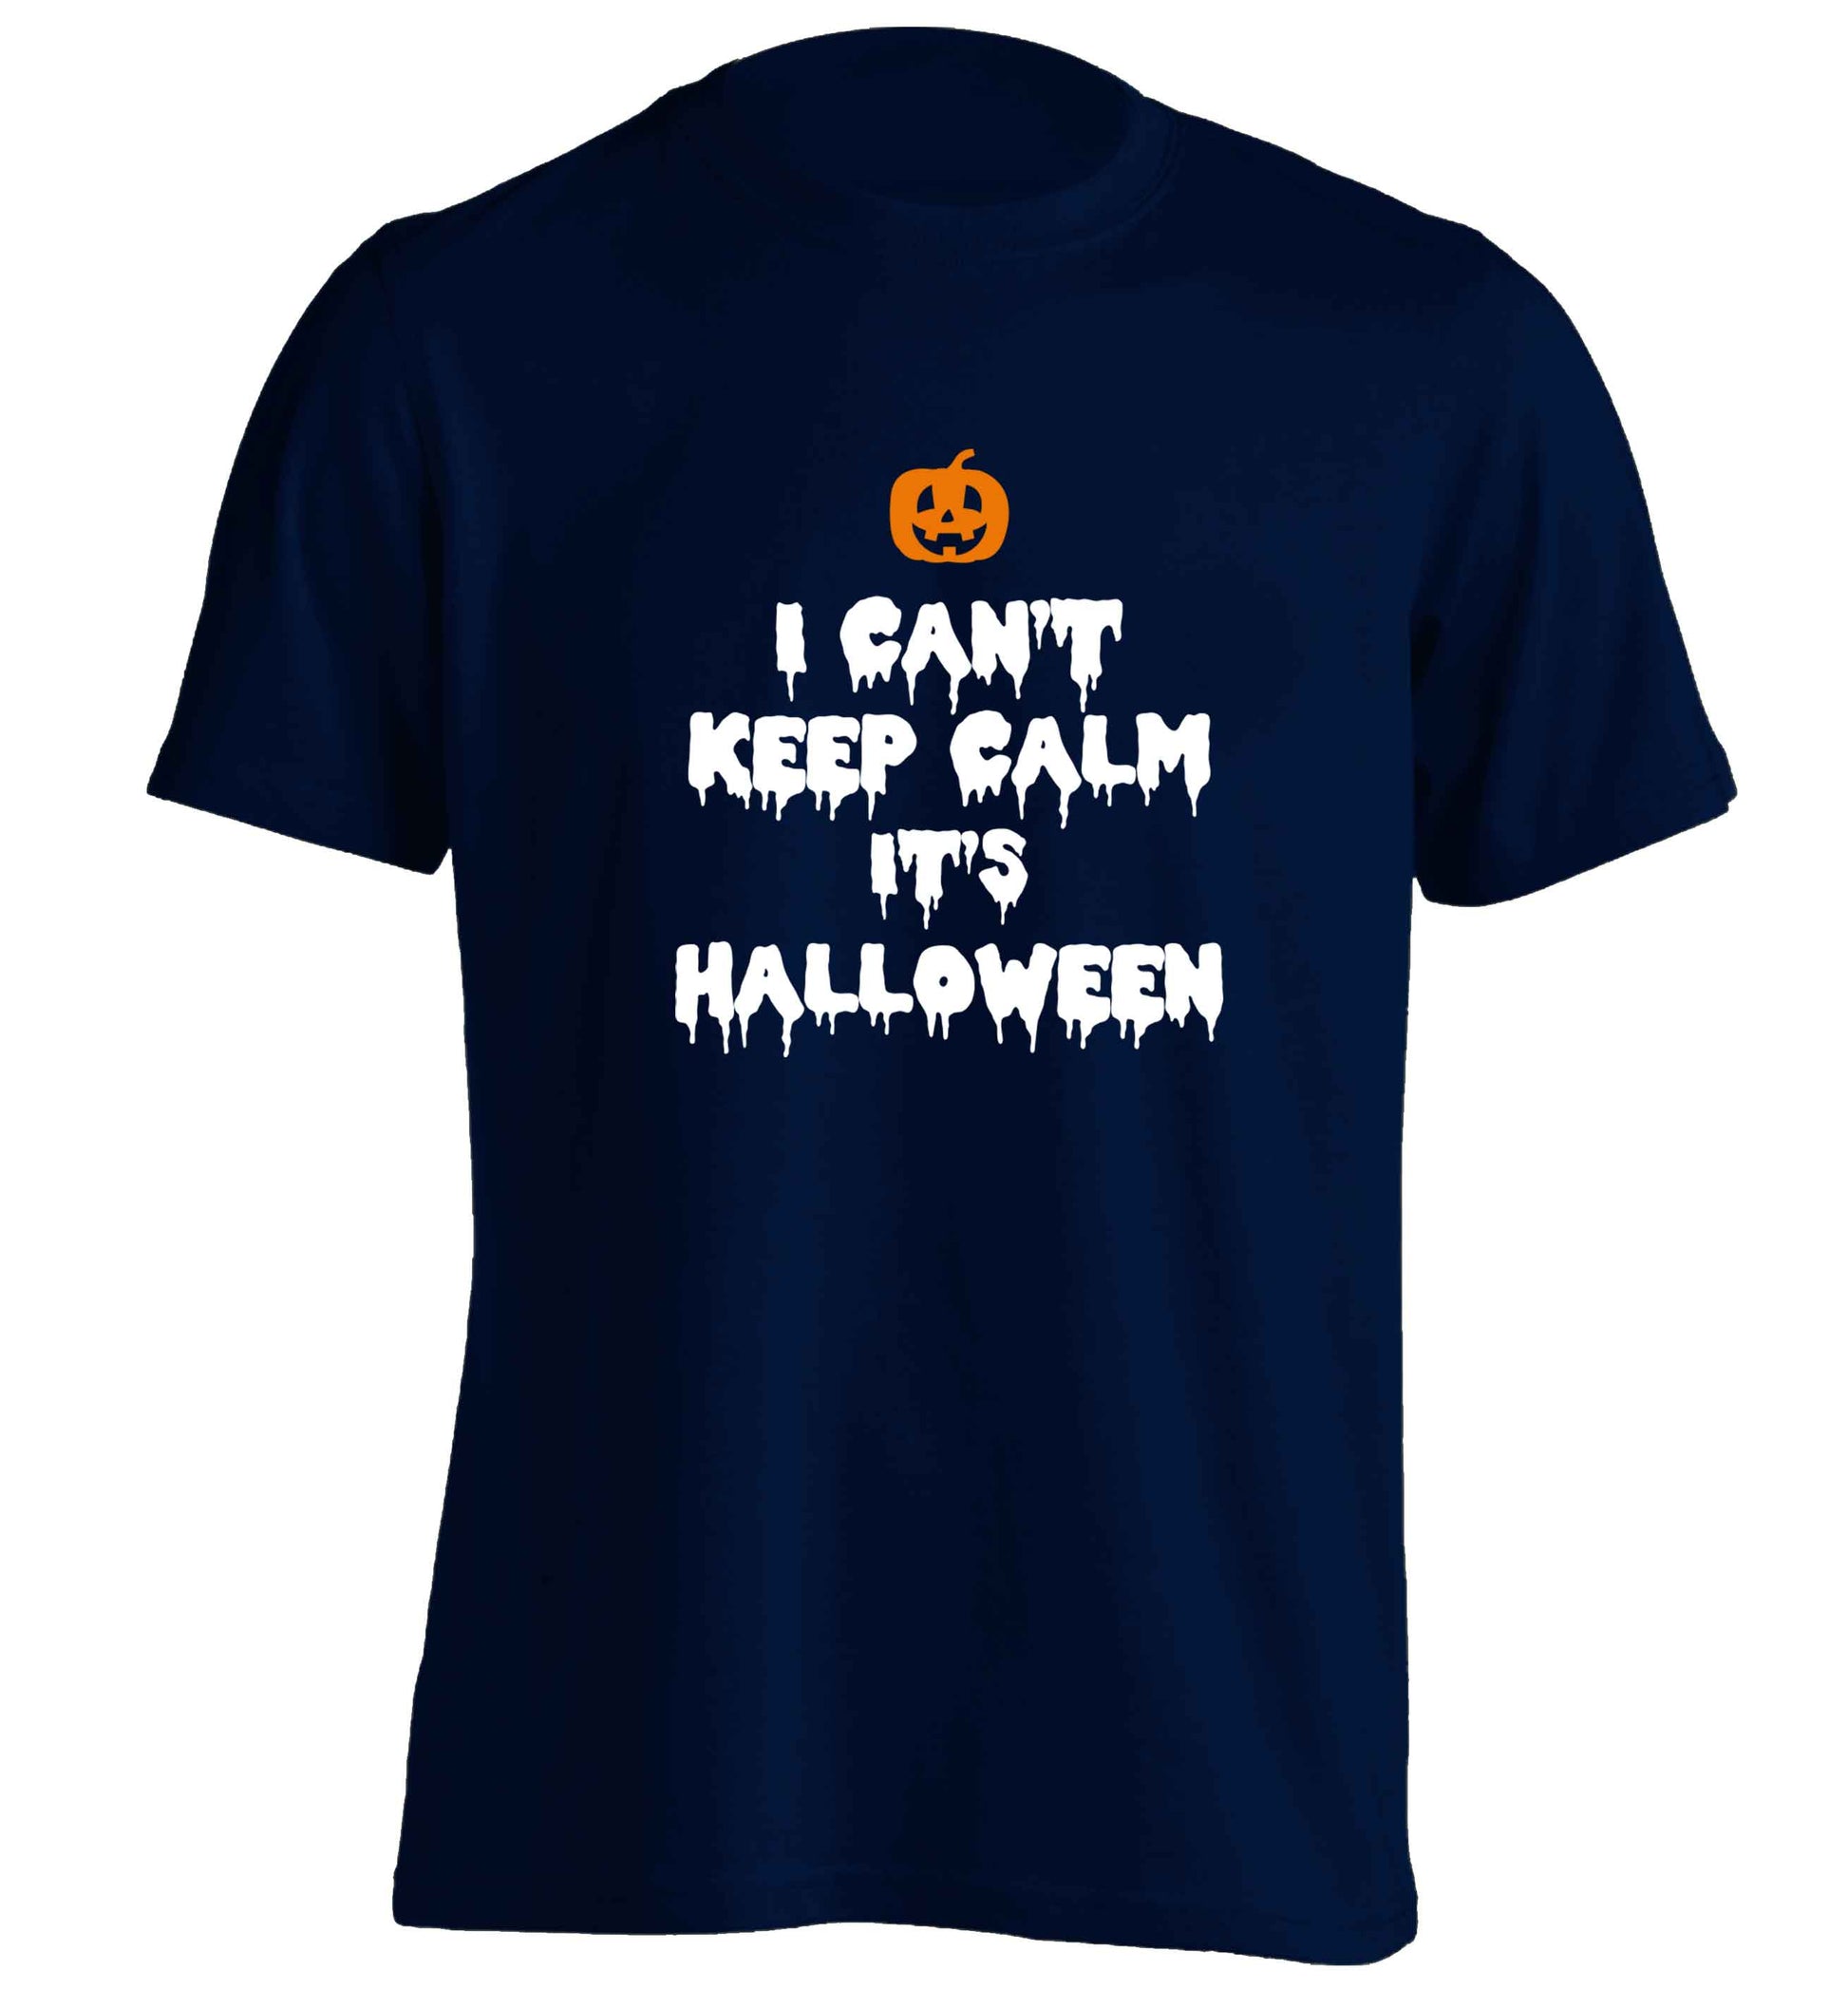 I can't keep calm it's halloween adults unisex navy Tshirt 2XL